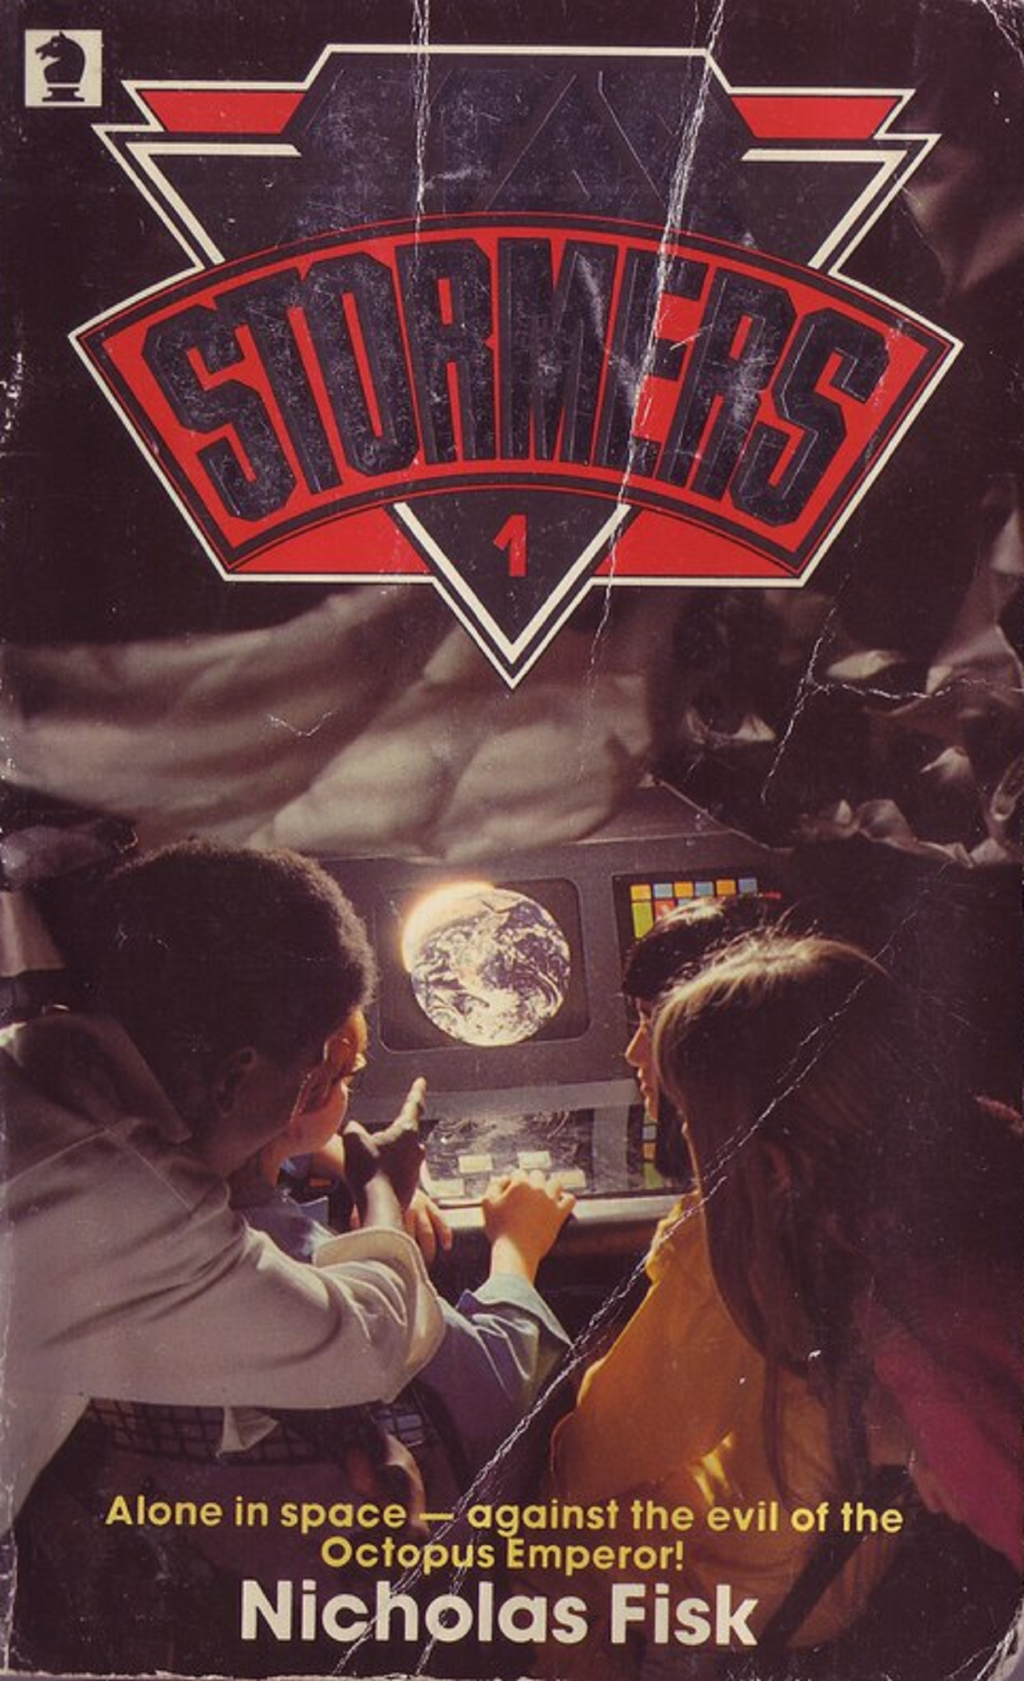 Starstormers by Nicholas Fisk (Knight Books, 1980).